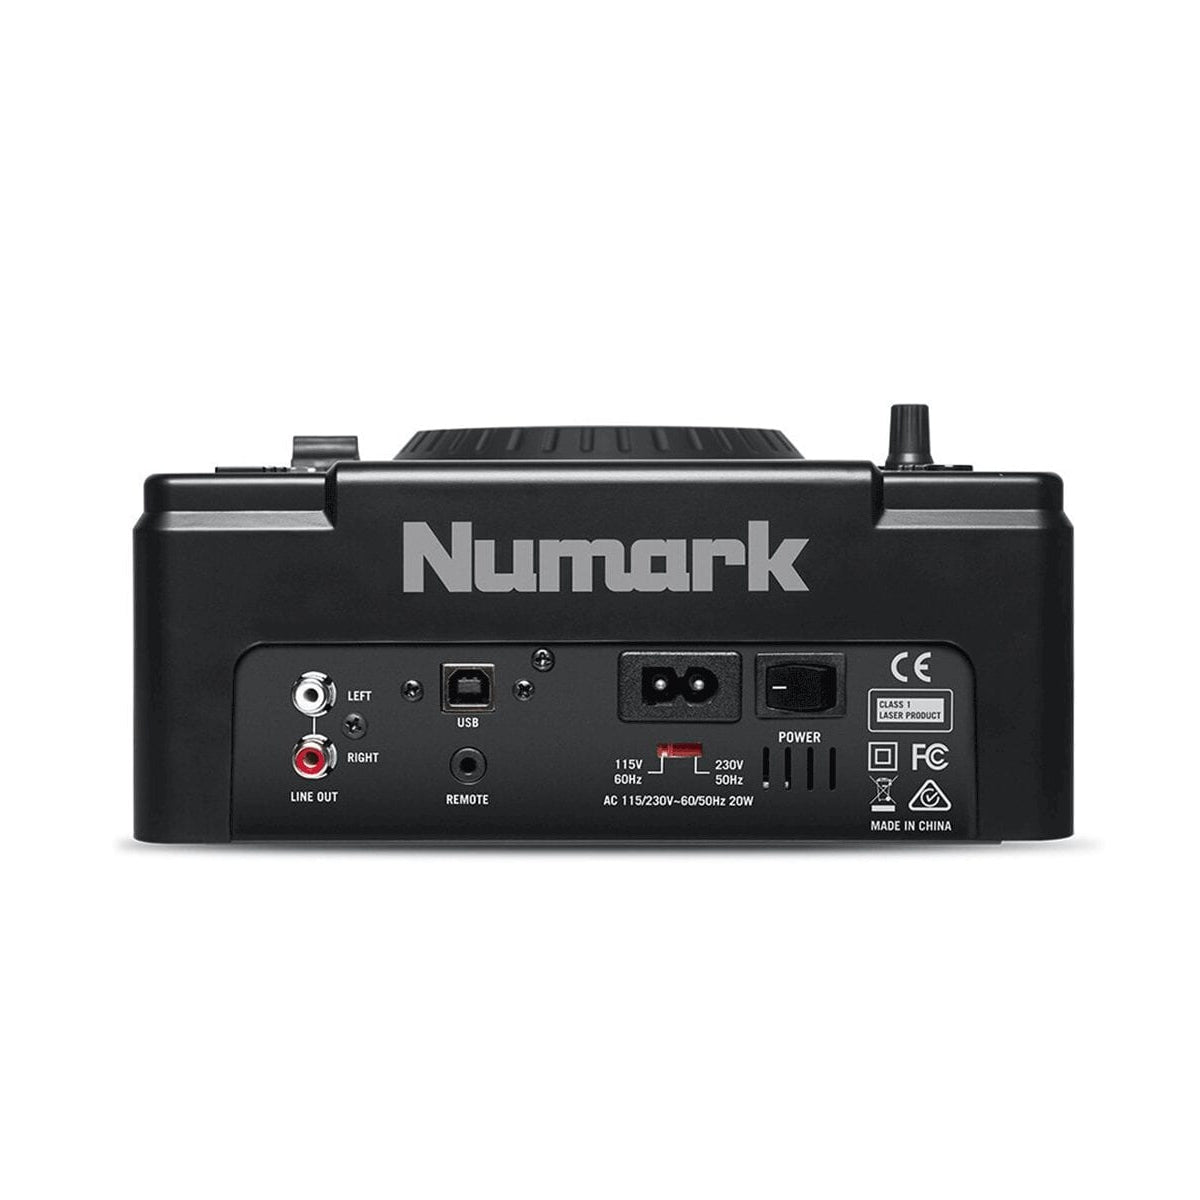 Numark NDX500 Table Top CD Player